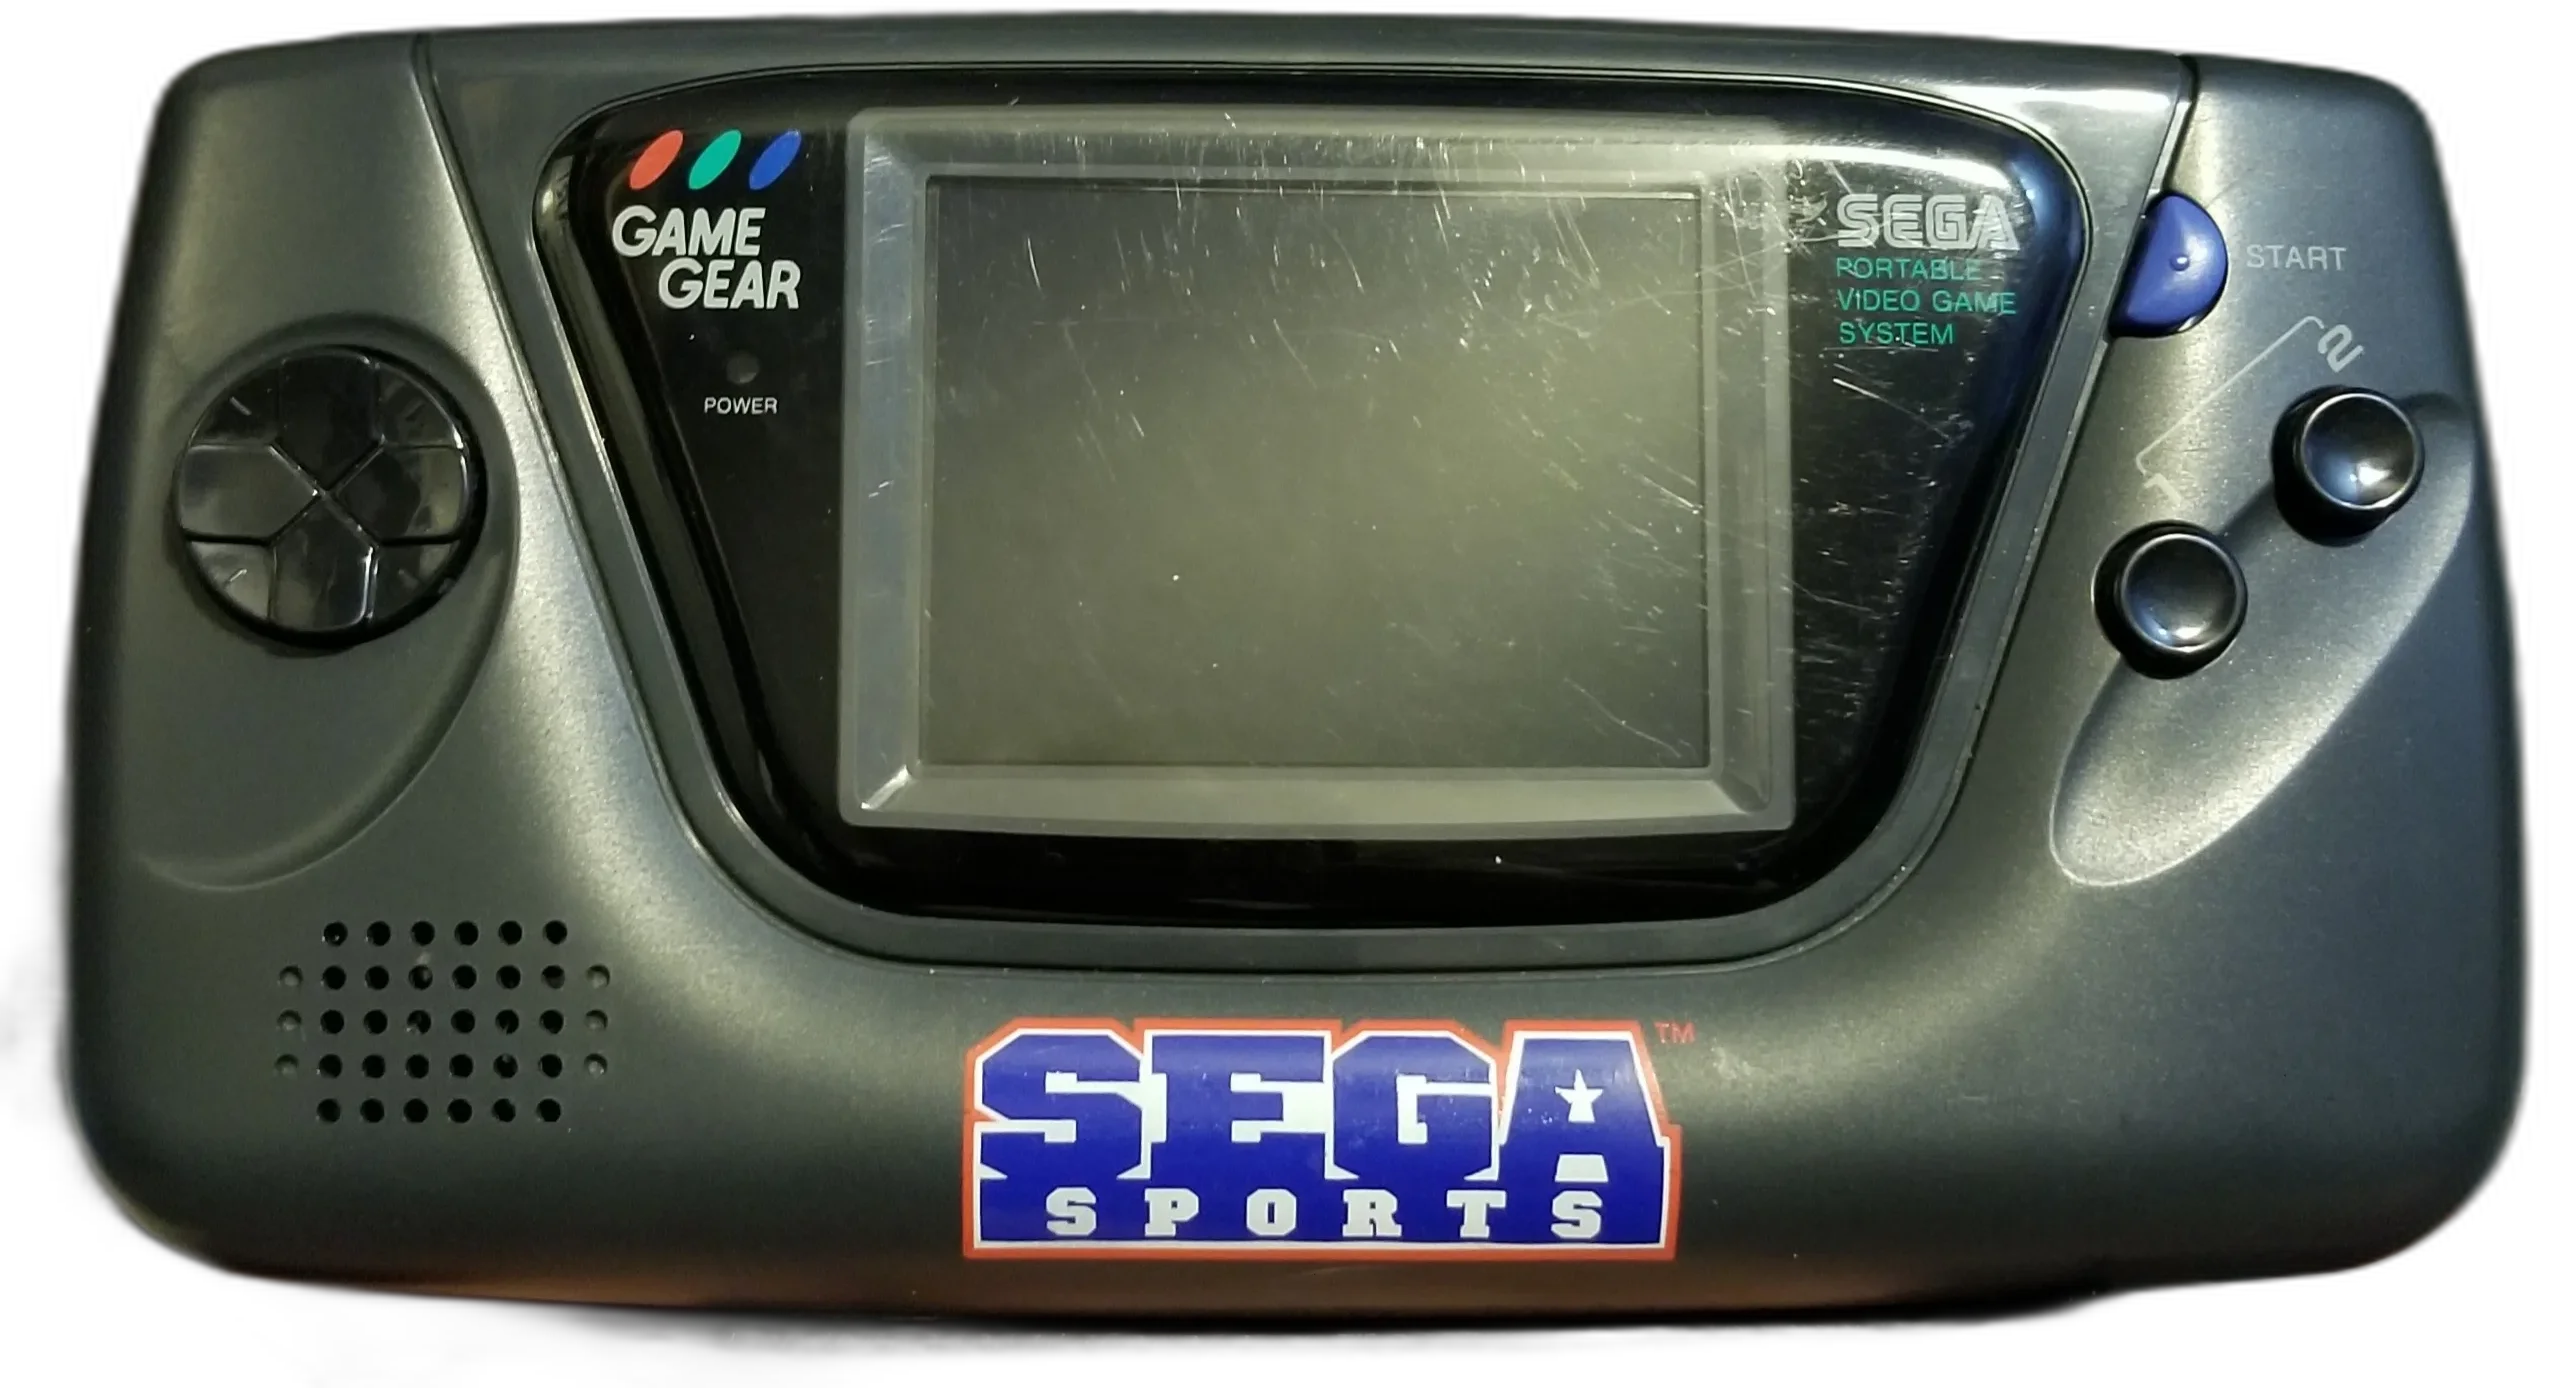  Sega Game Gear Sports Console